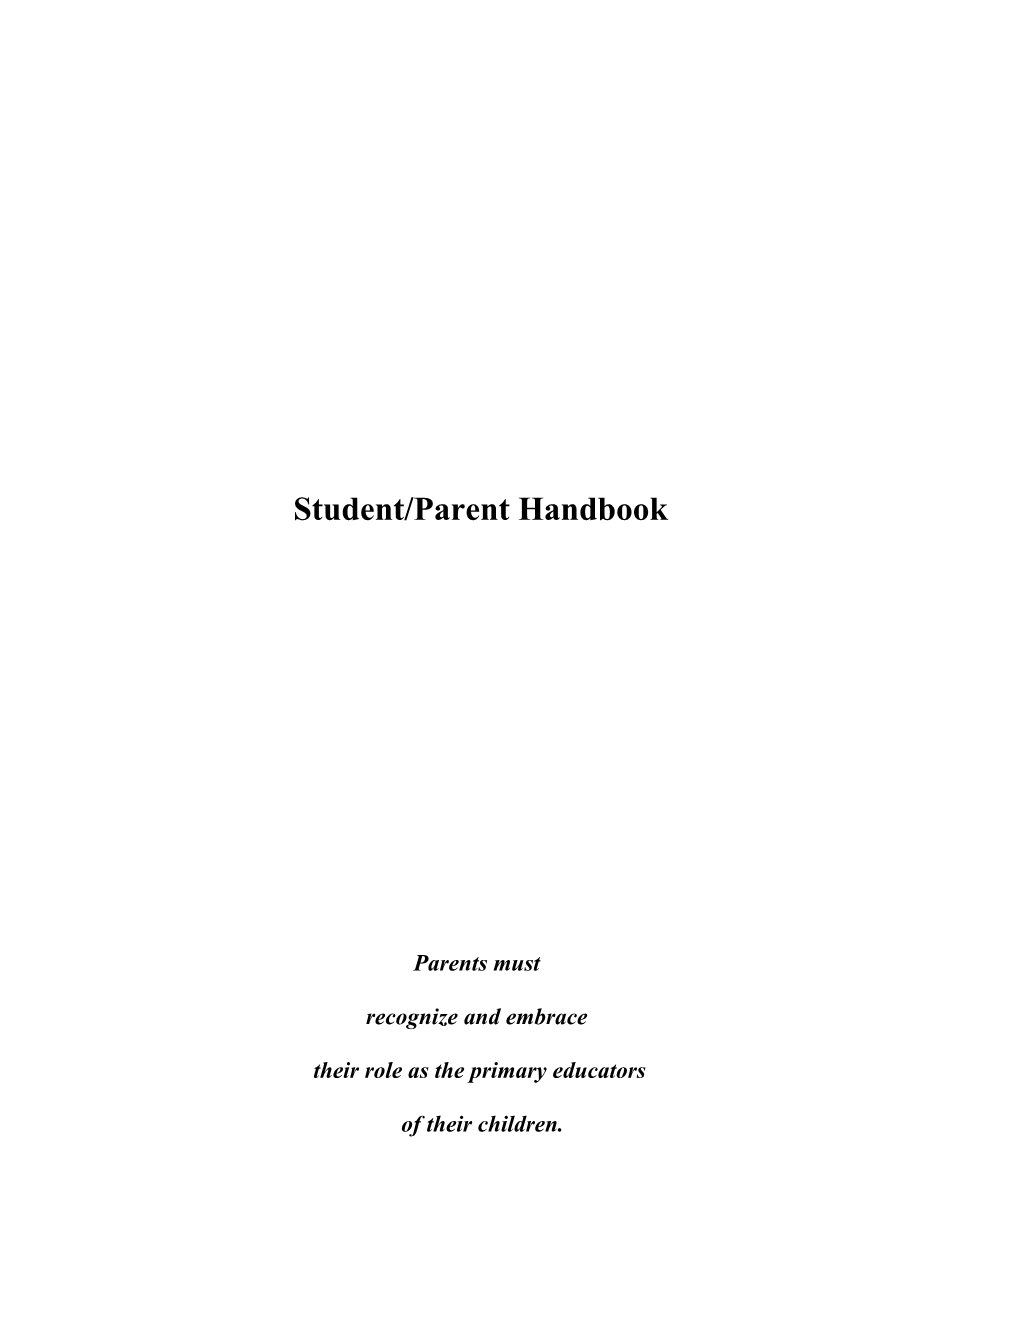 Student/Parent Handbook s4